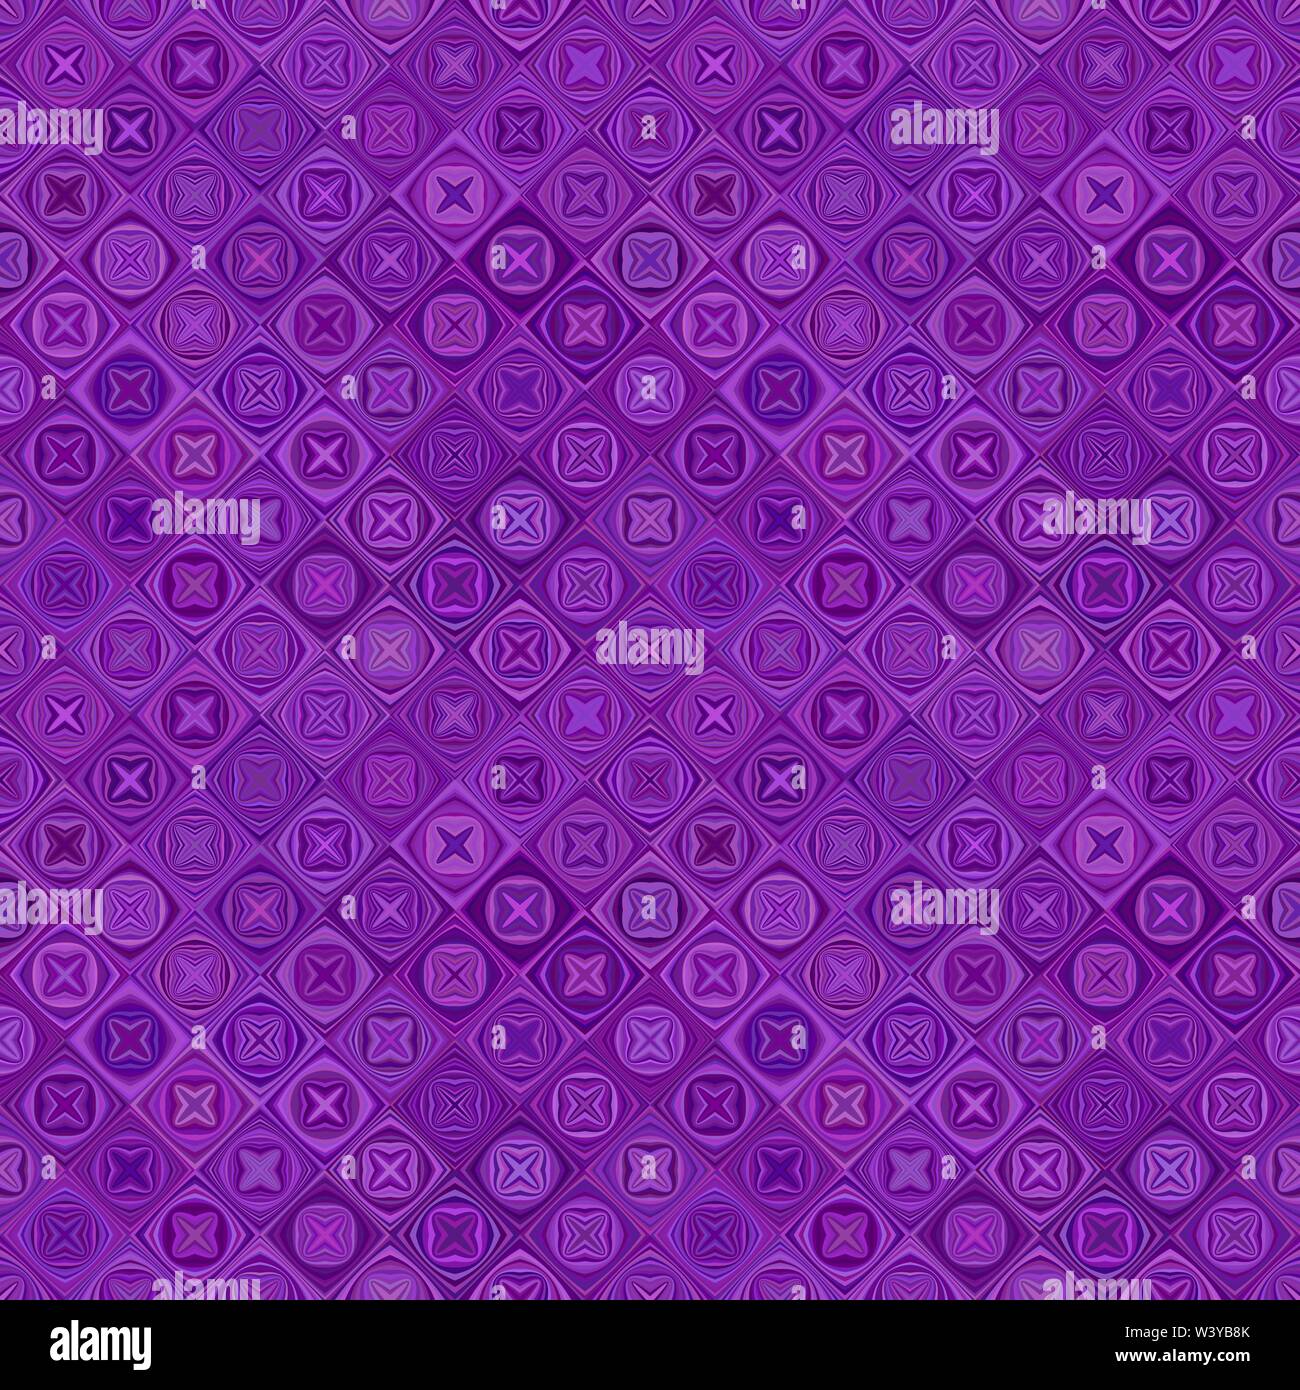 Purple abstract diagonal gebogenen Form Mosaik Muster Hintergrund - nahtlose Design Stock Vektor